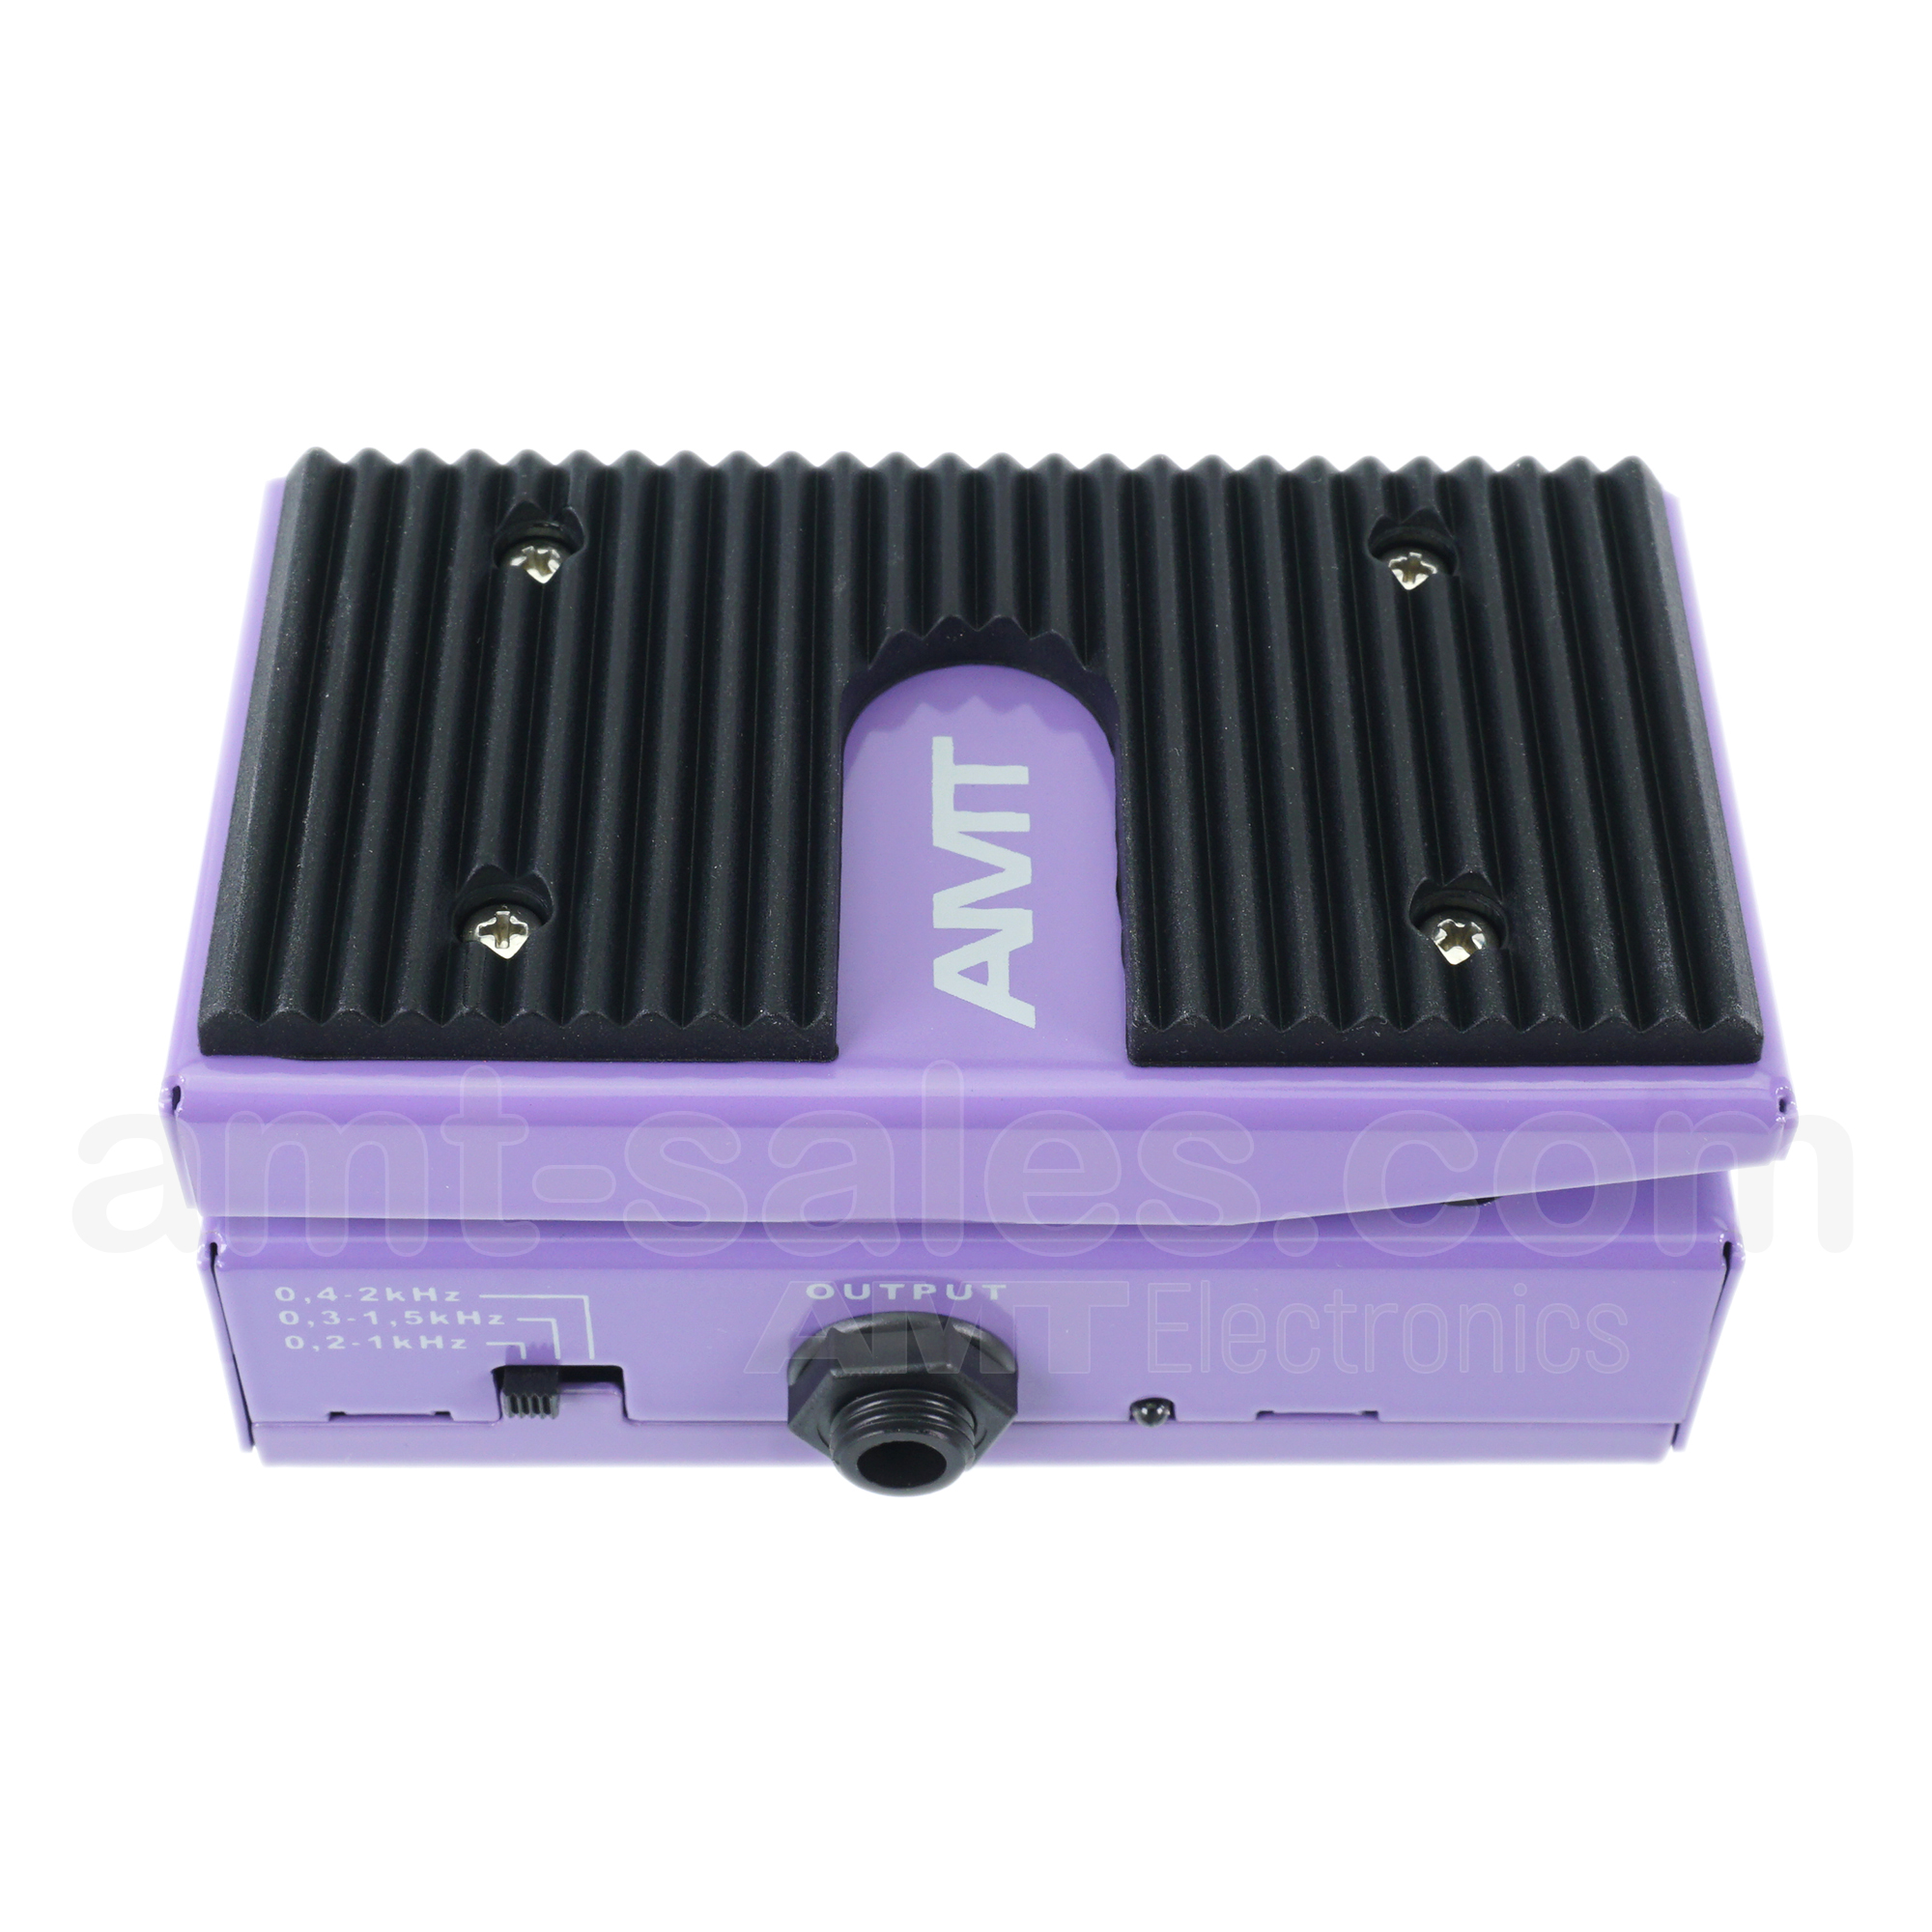 AMT WH-1 - Optical WAH-WAH pedal for guitar